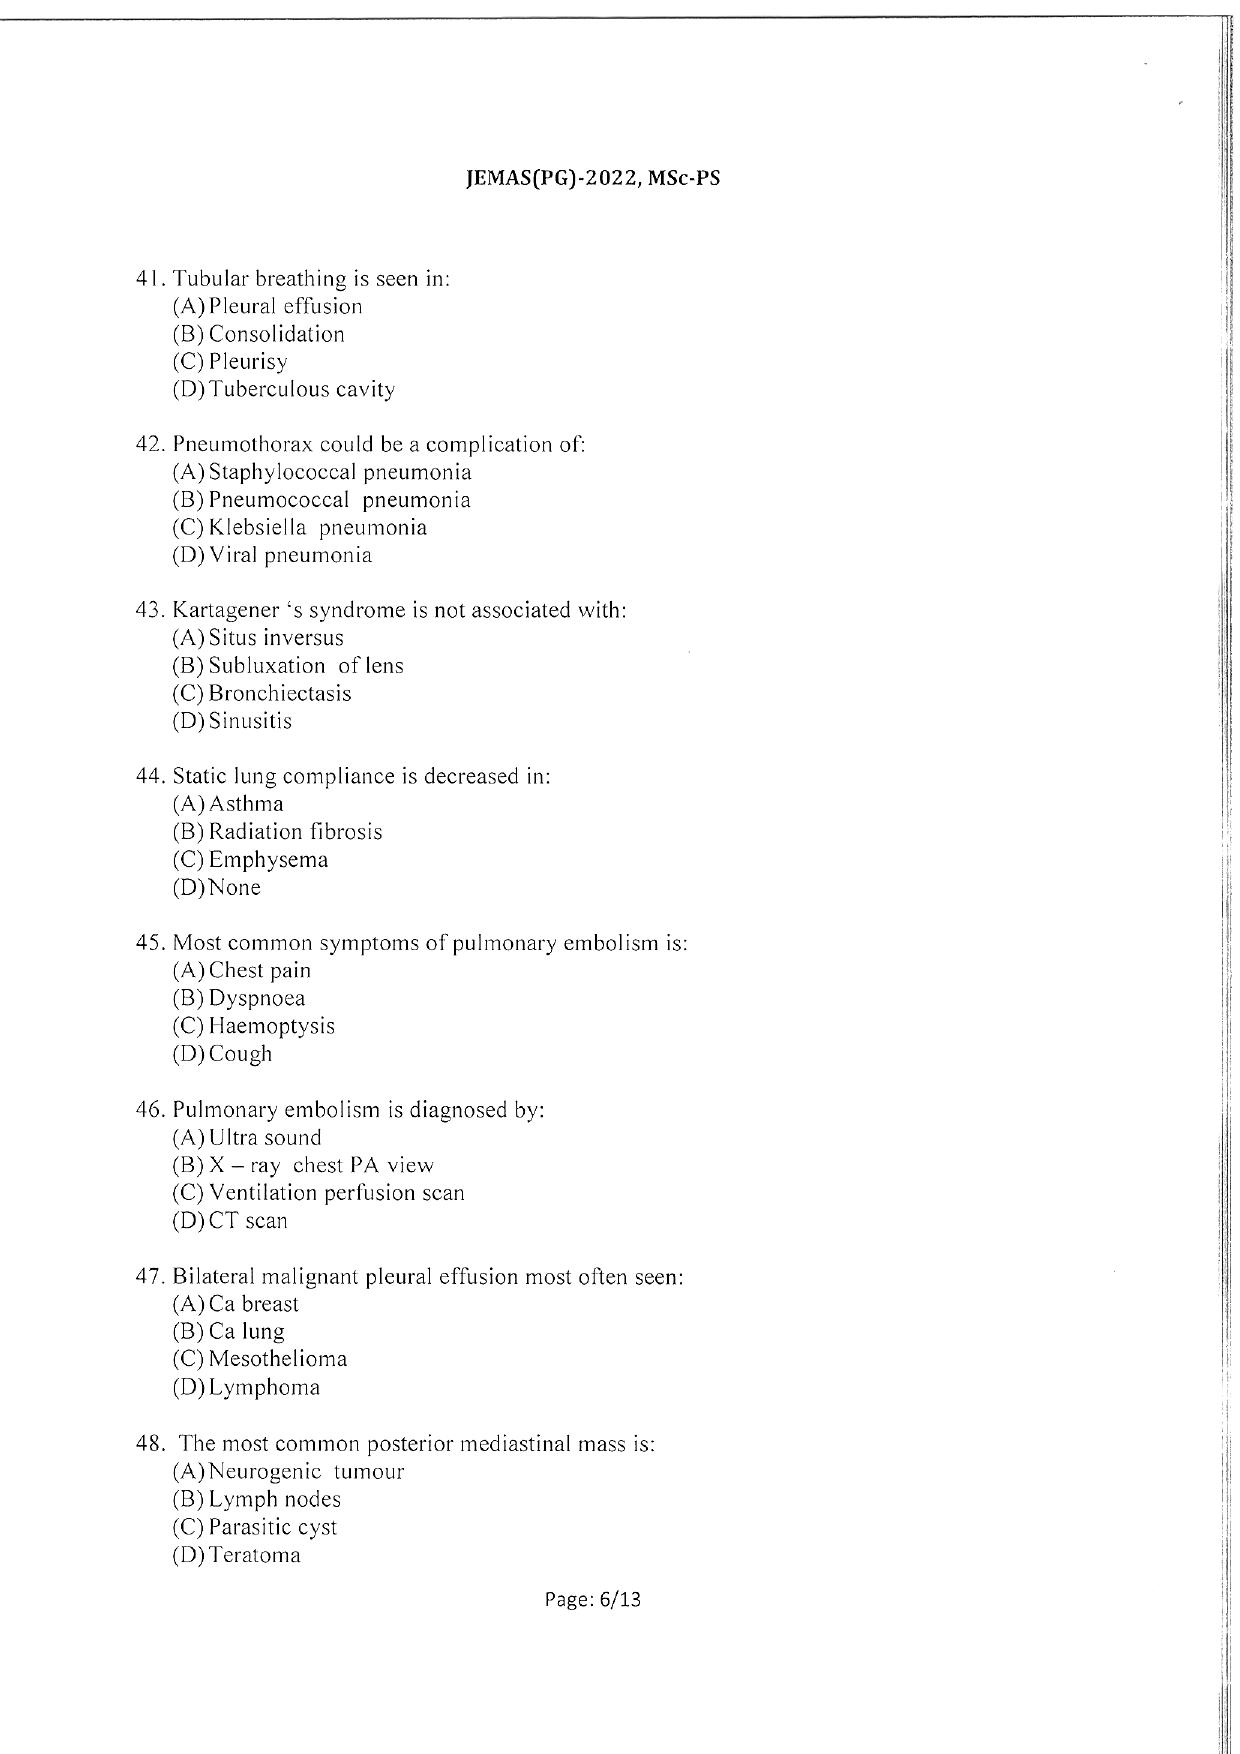 WBJEEB JEMAS (PG) 2022 MSc PS Question Paper - Page 8